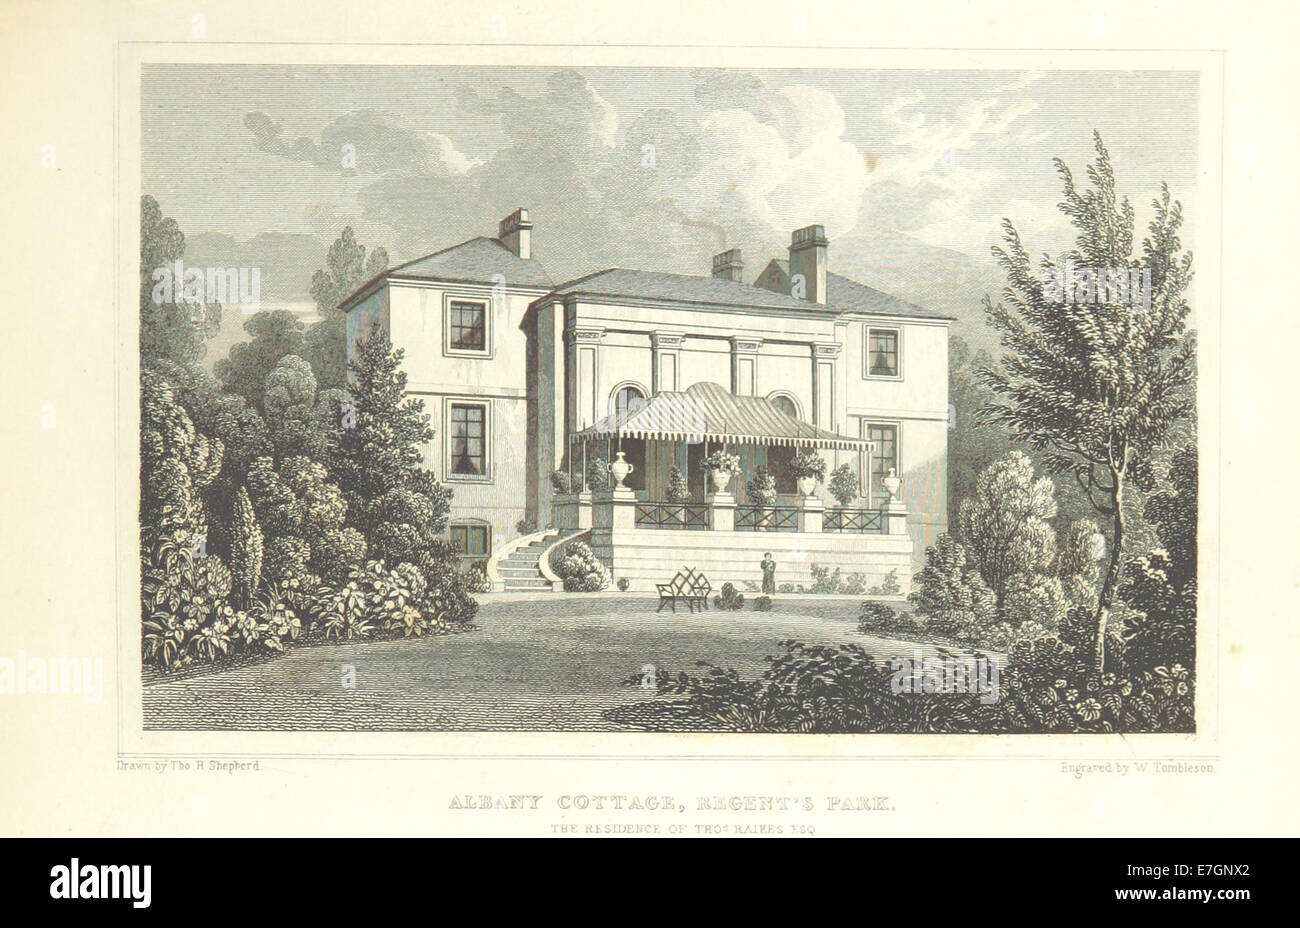 Albany Cottage, Regent's Park - Shepherd, Metropolitan Improvements (1828), p227 Stock Photo